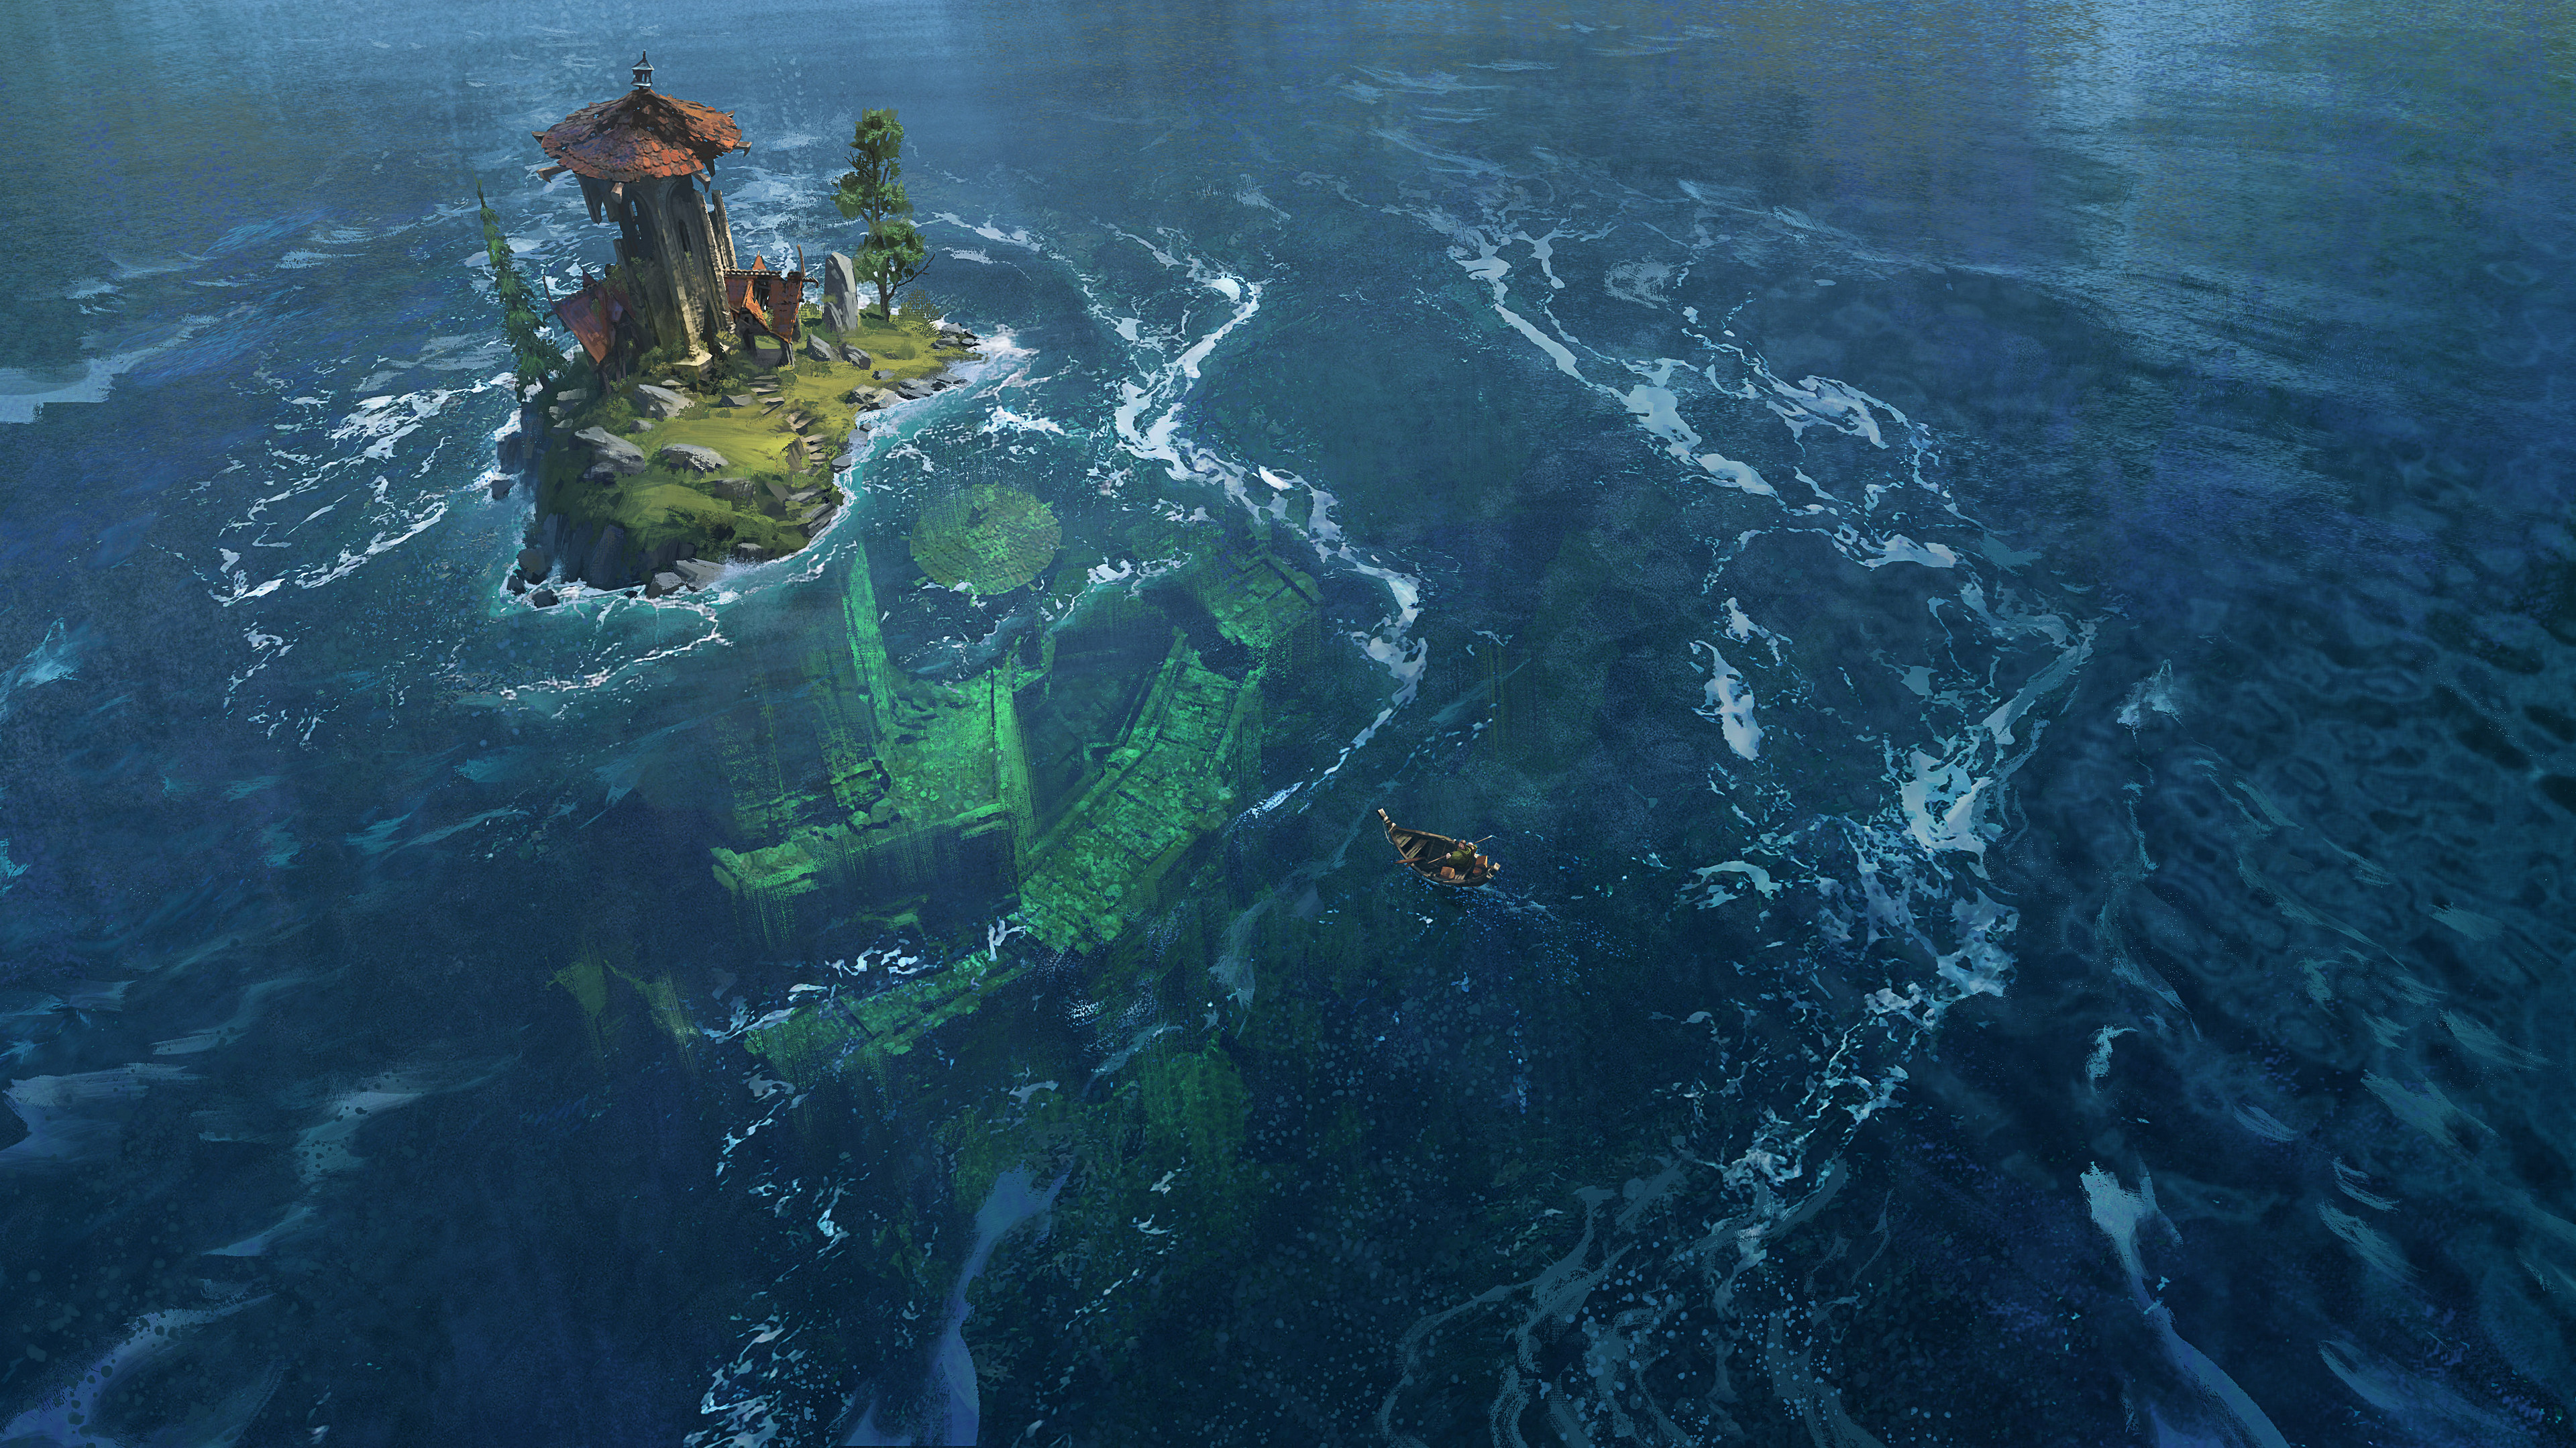 Artwork Digital Art Fantasy Art Island Ruins Underwater Rowboat Abandoned City Boat 3840x2159